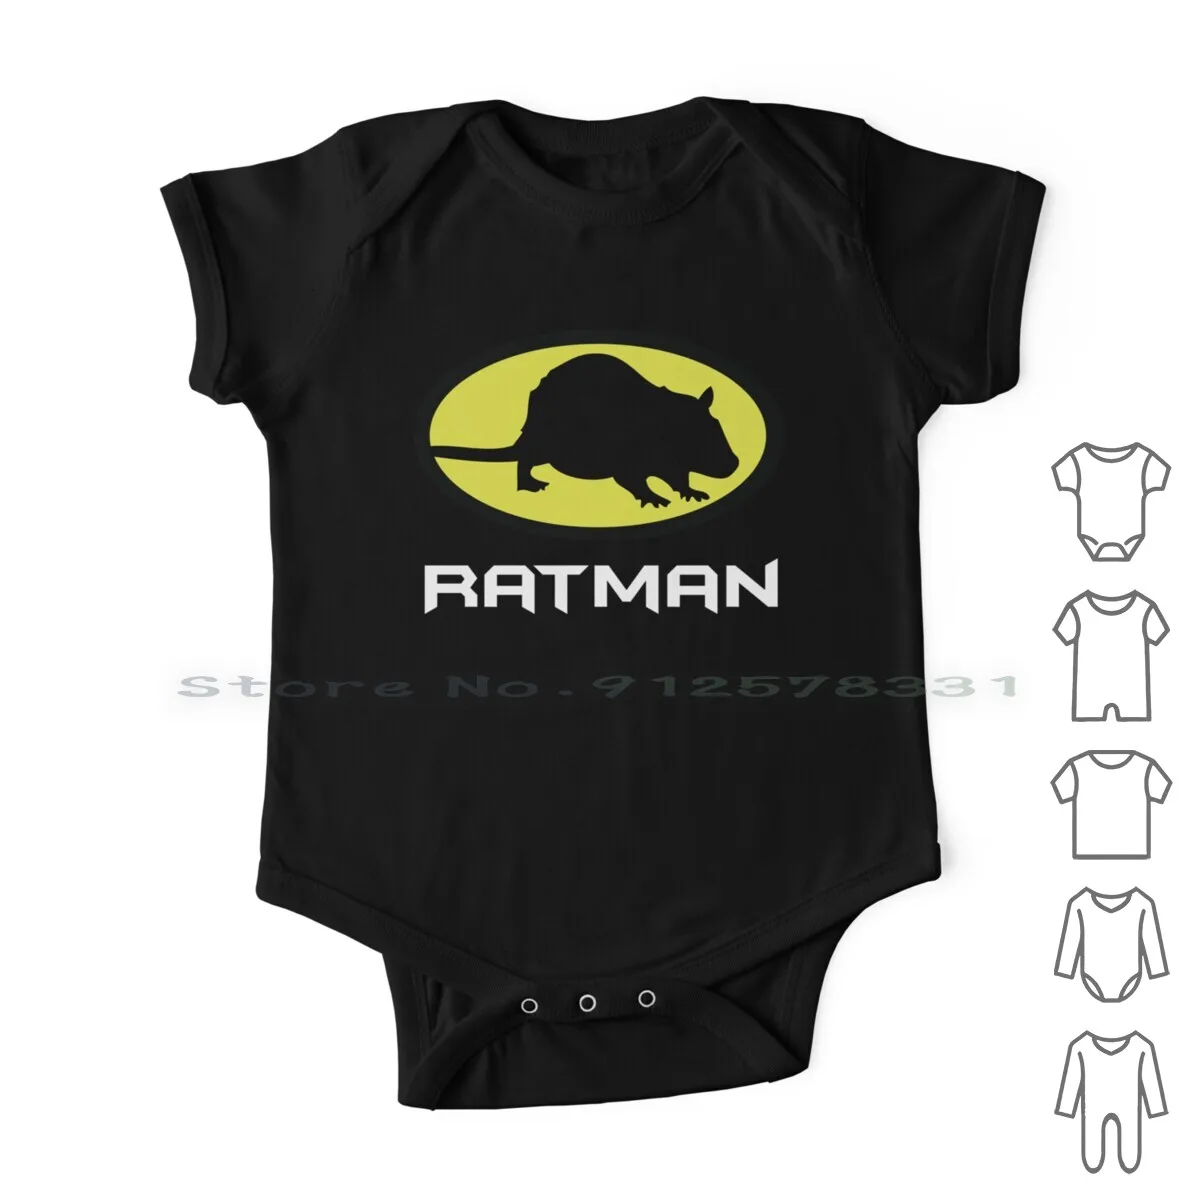 Ratman Newborn Baby Clothes Rompers Cotton Jumpsuits Funny Cool Black Geek  Cartoon Vector Humor Comedy Ratman Comics Infant _ - AliExpress Mobile